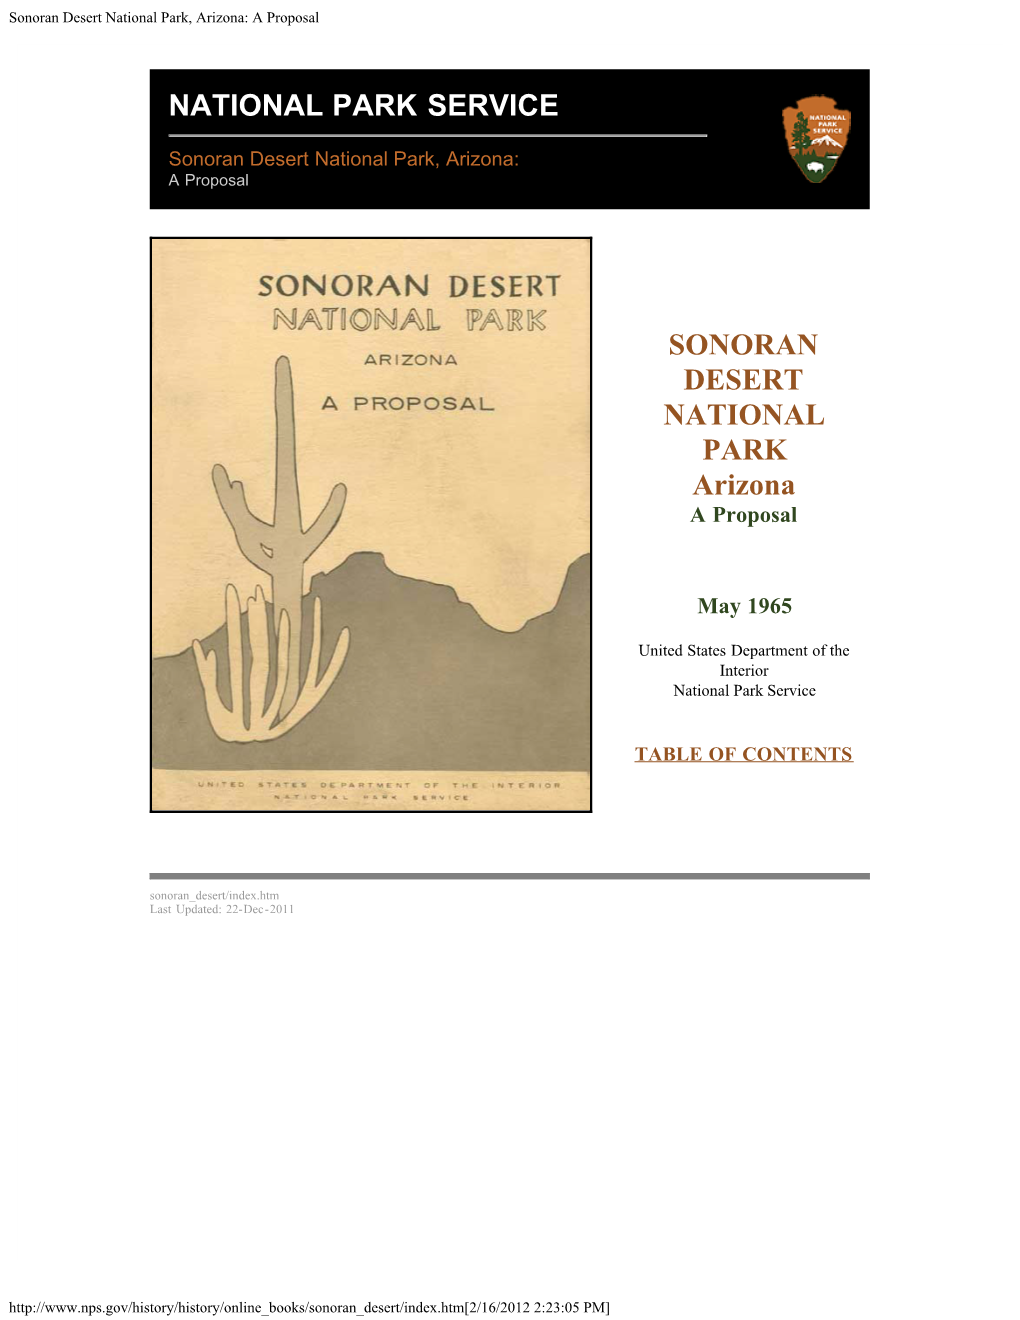 Sonoran Desert National Park, Arizona: a Proposal